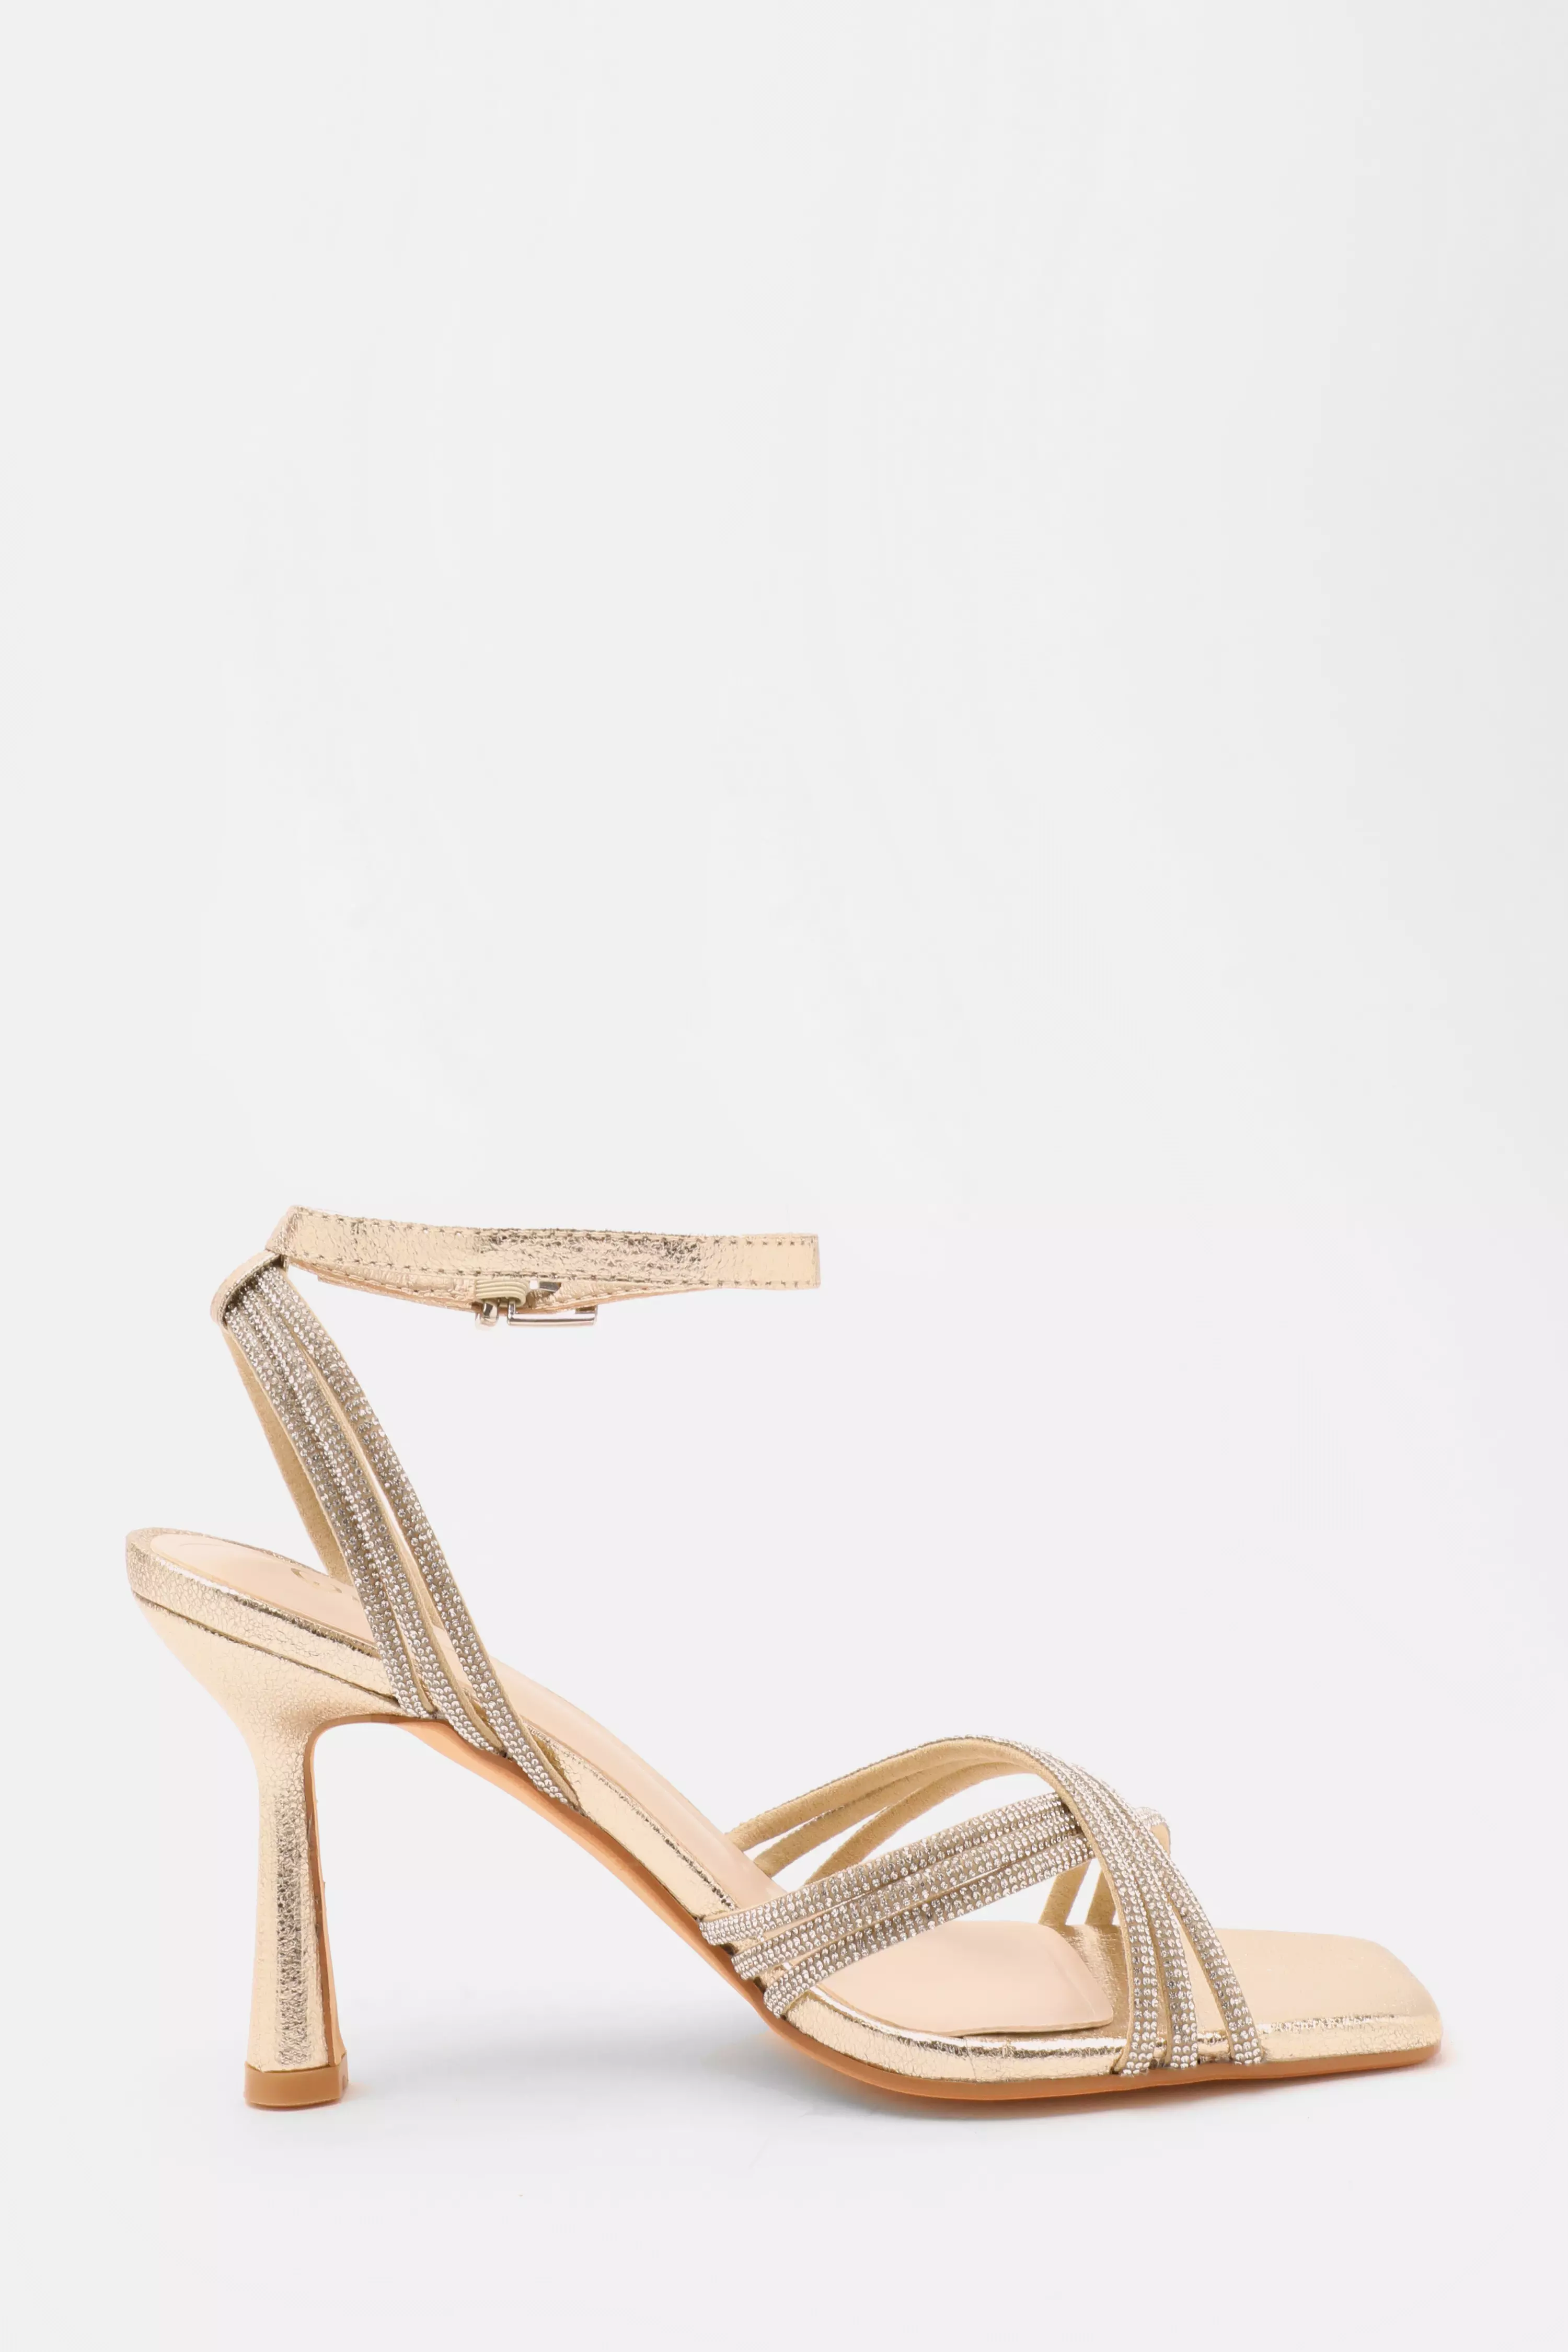 Gold Diamante Strap Heeled Sandals - QUIZ Clothing